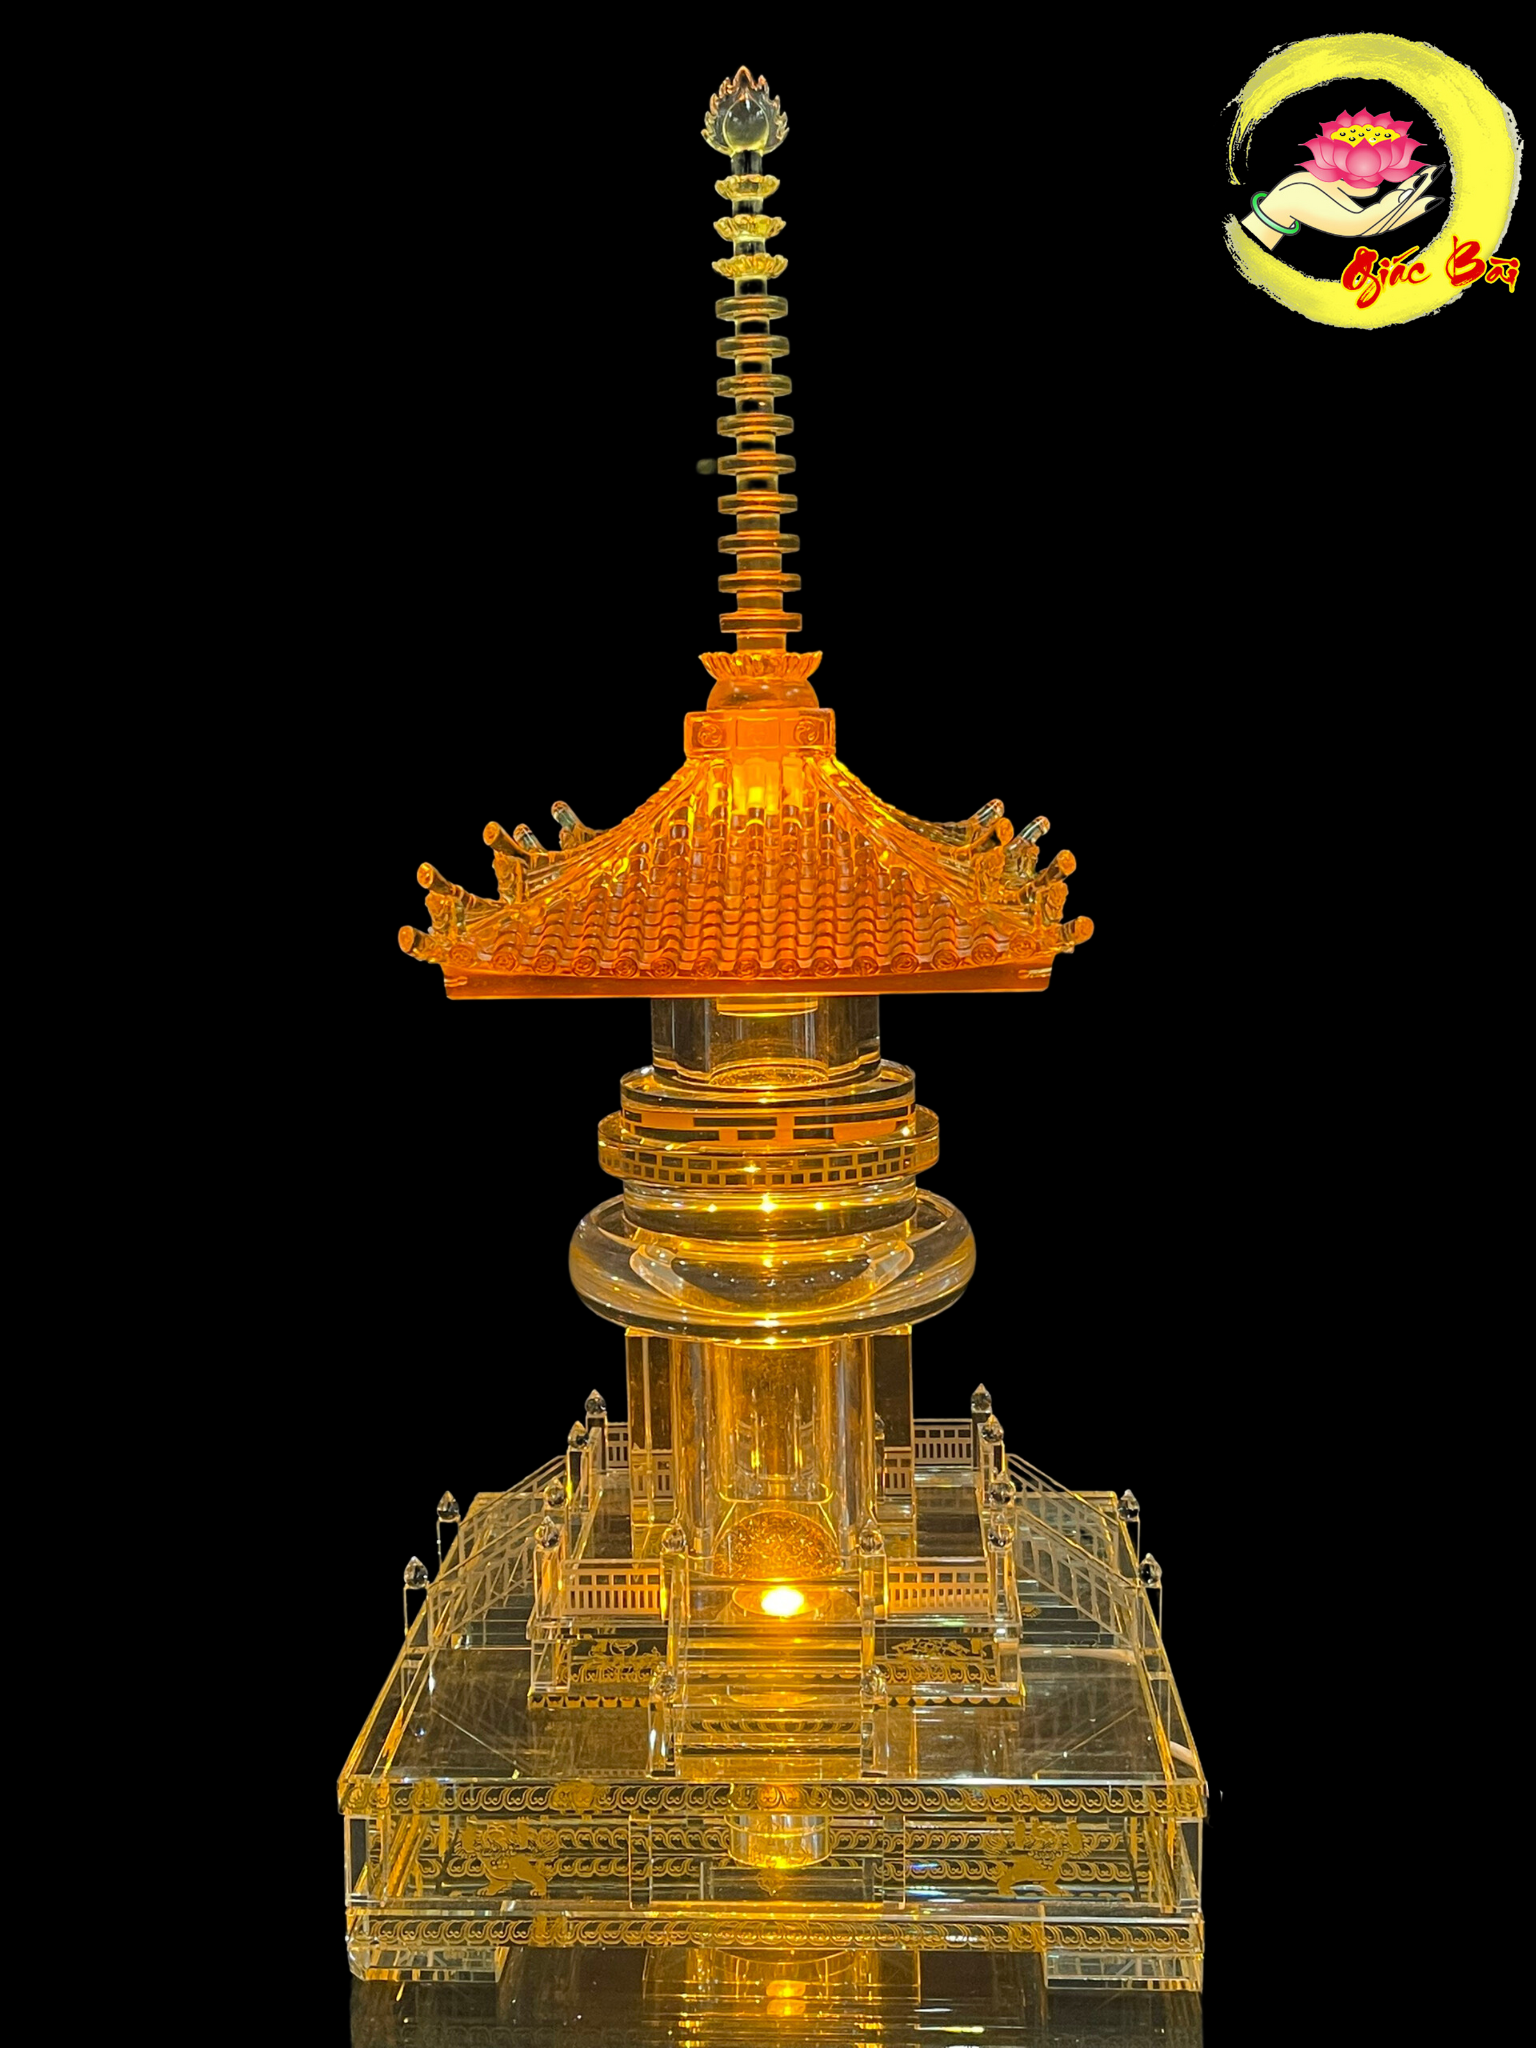 Tháp Xá Lợi Tua Bảo Một Tầng Mái Cao 76 cm - TTB1